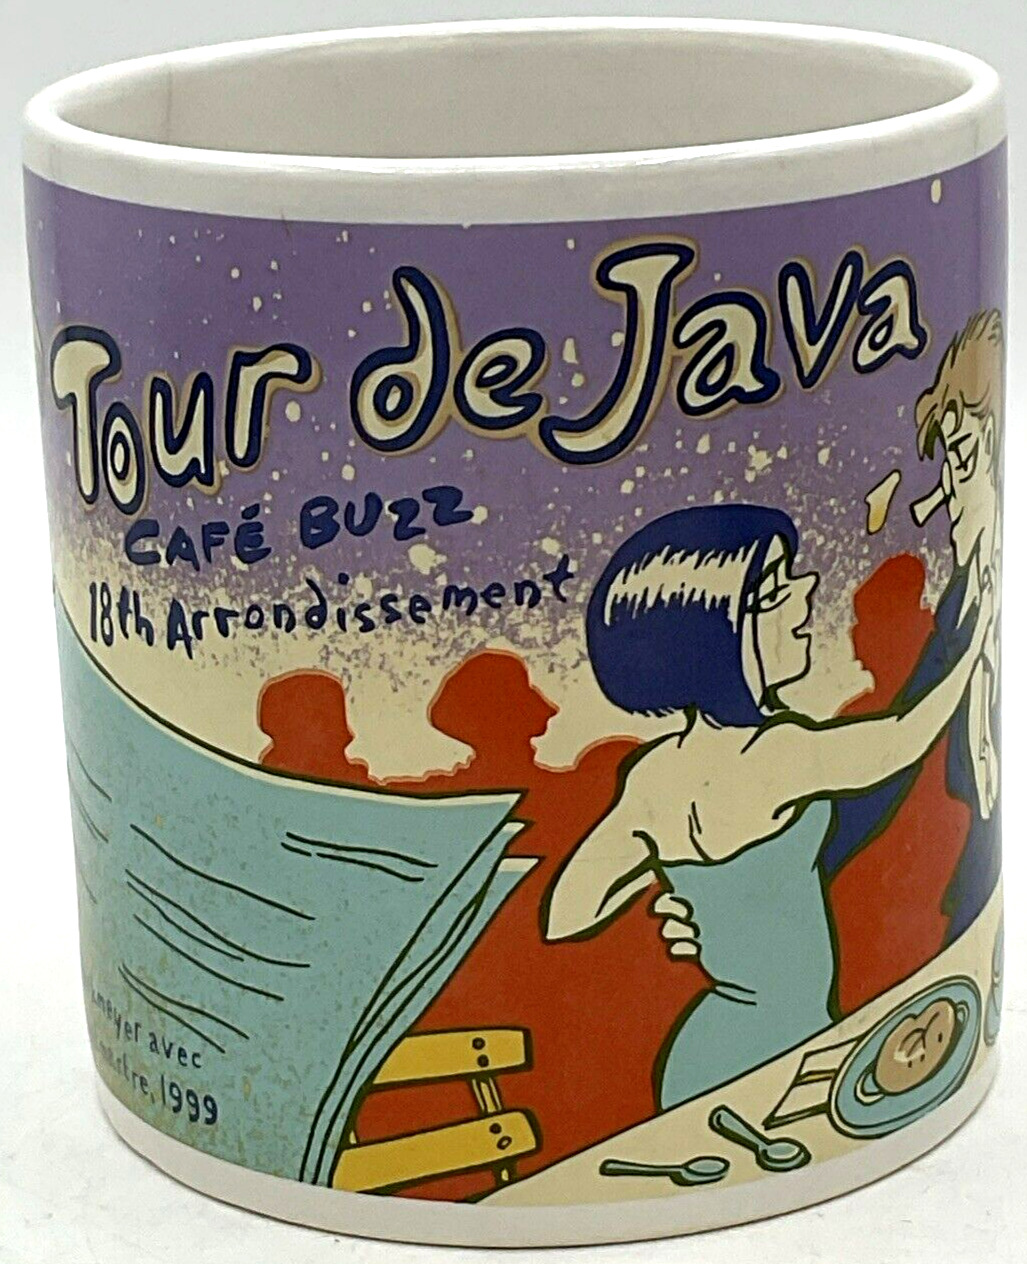 Scarce 1999 Gary Trudeau Starbucks Mug Tour de Java Cafe Buzz Doonesbury SEE